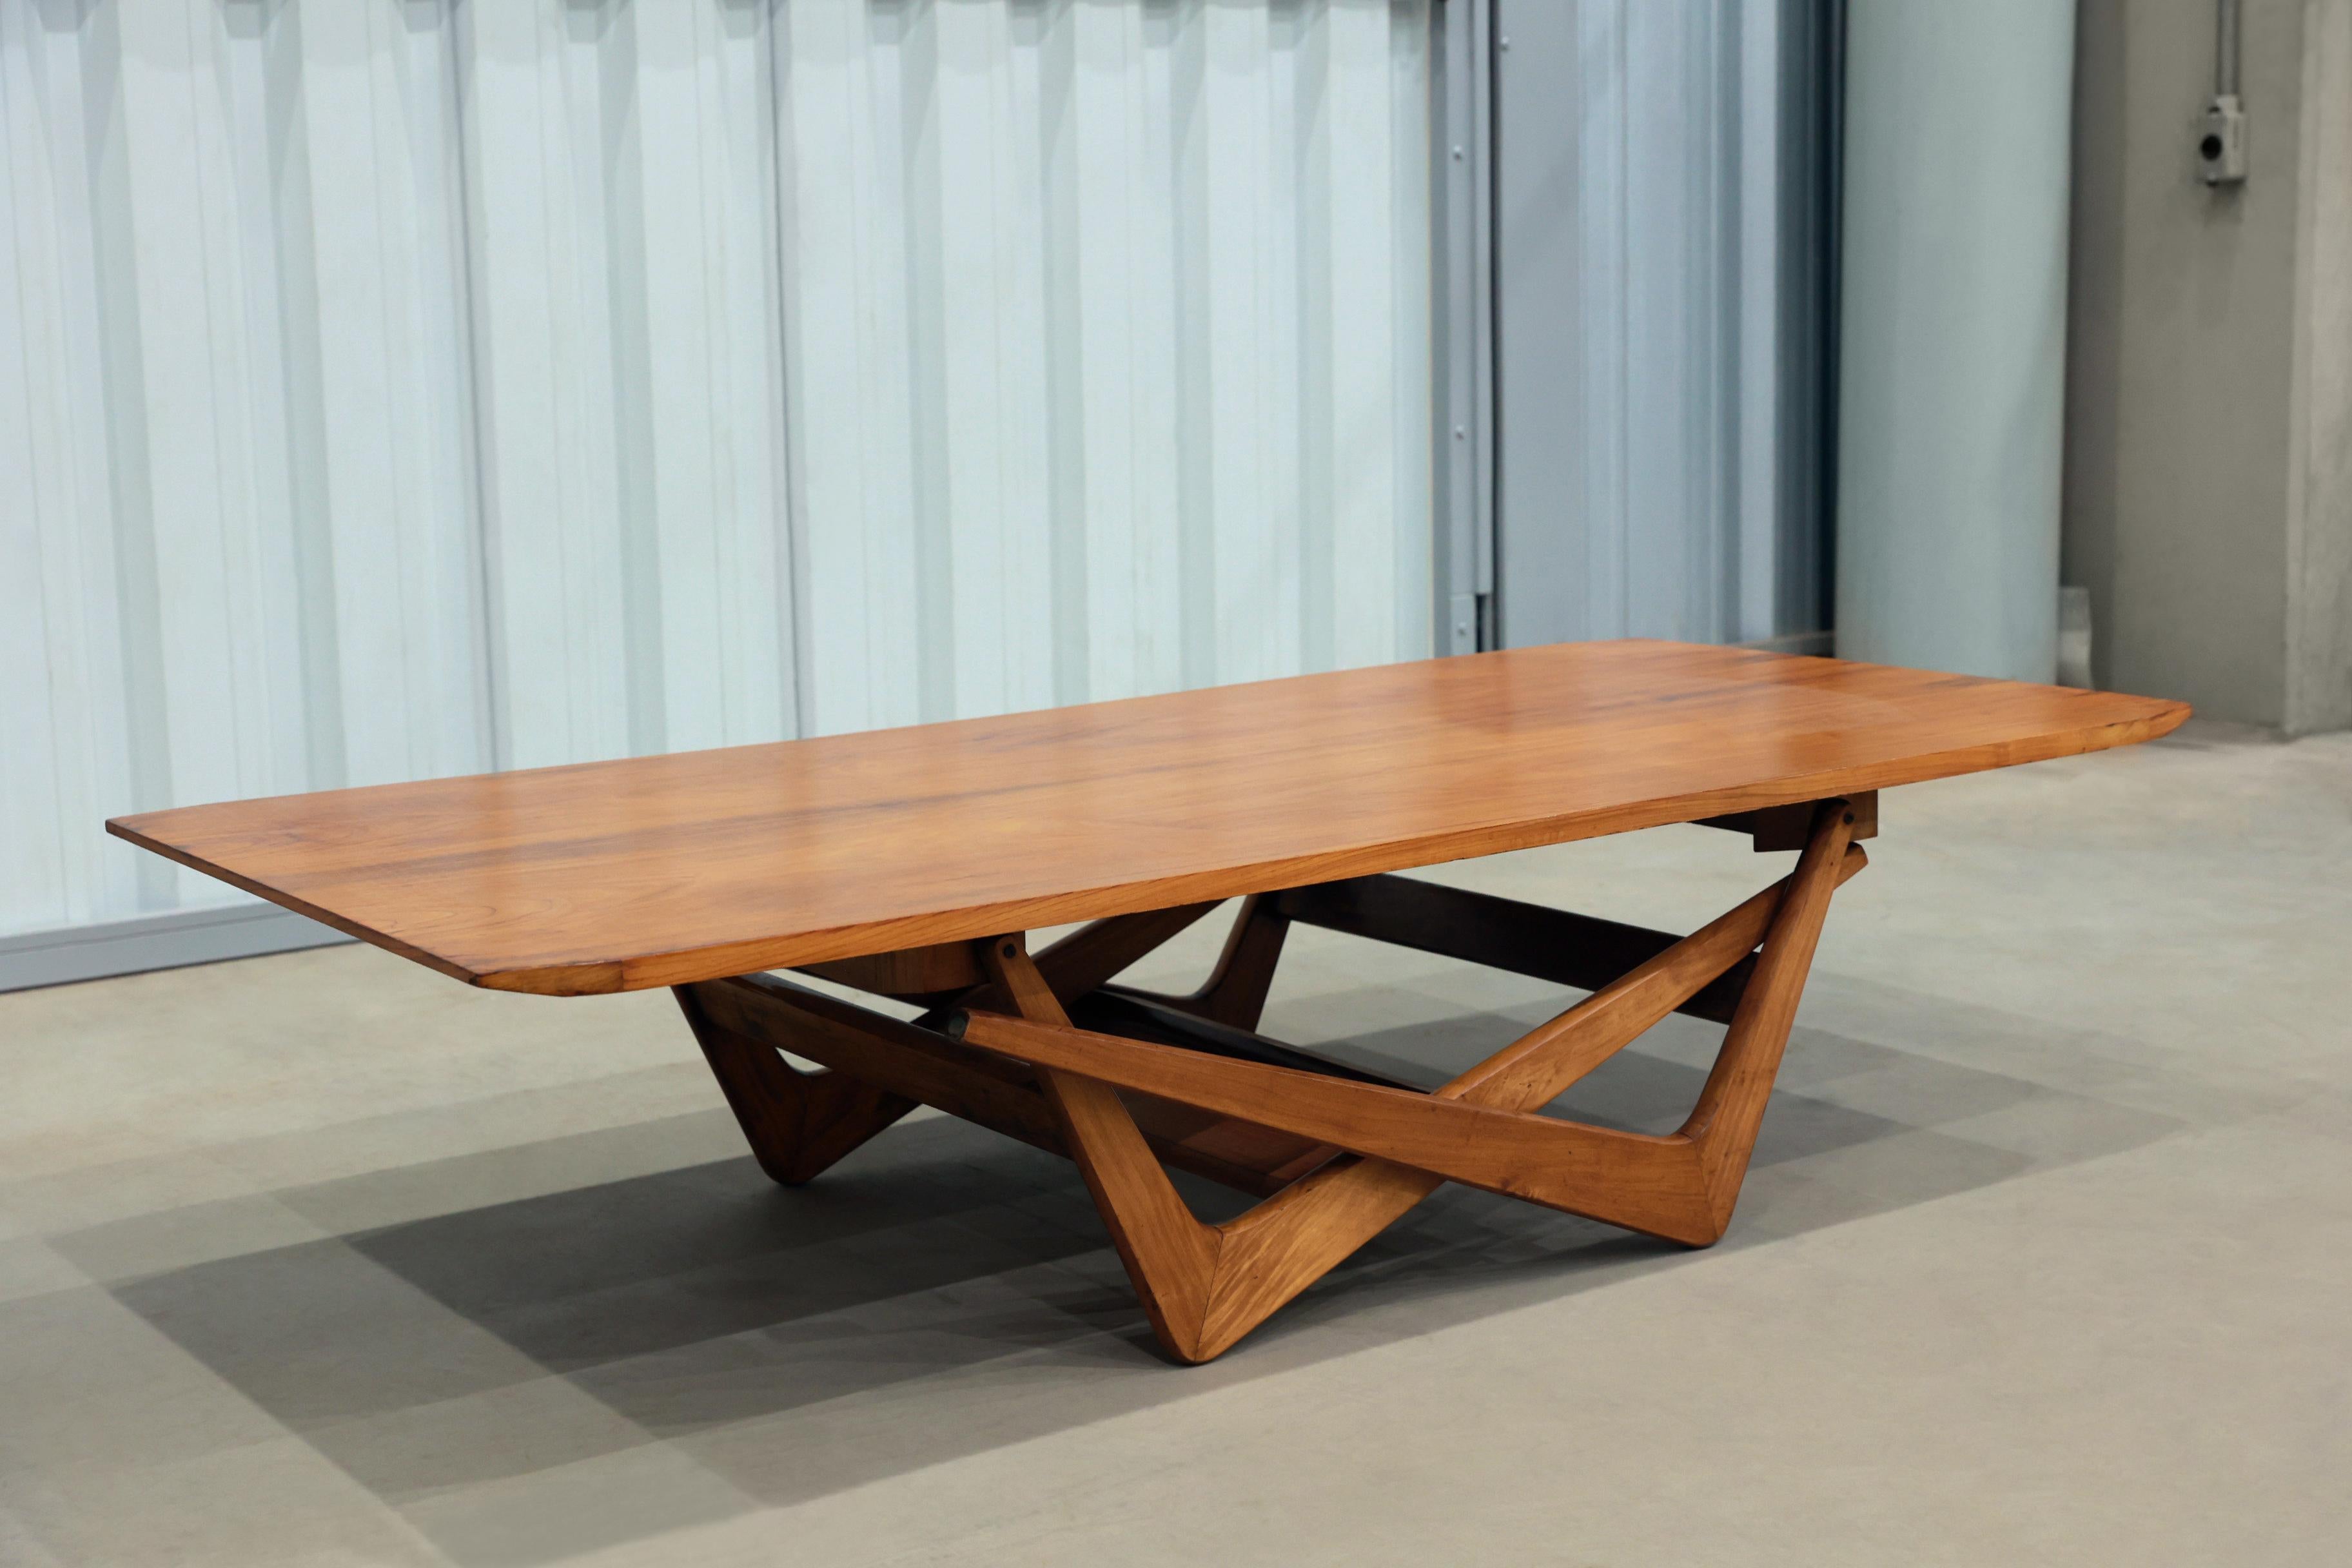 Hand-Crafted Brazilian Modern Foldable Dining & Coffee Table in Hardwood, Carlo Hauner Brazil